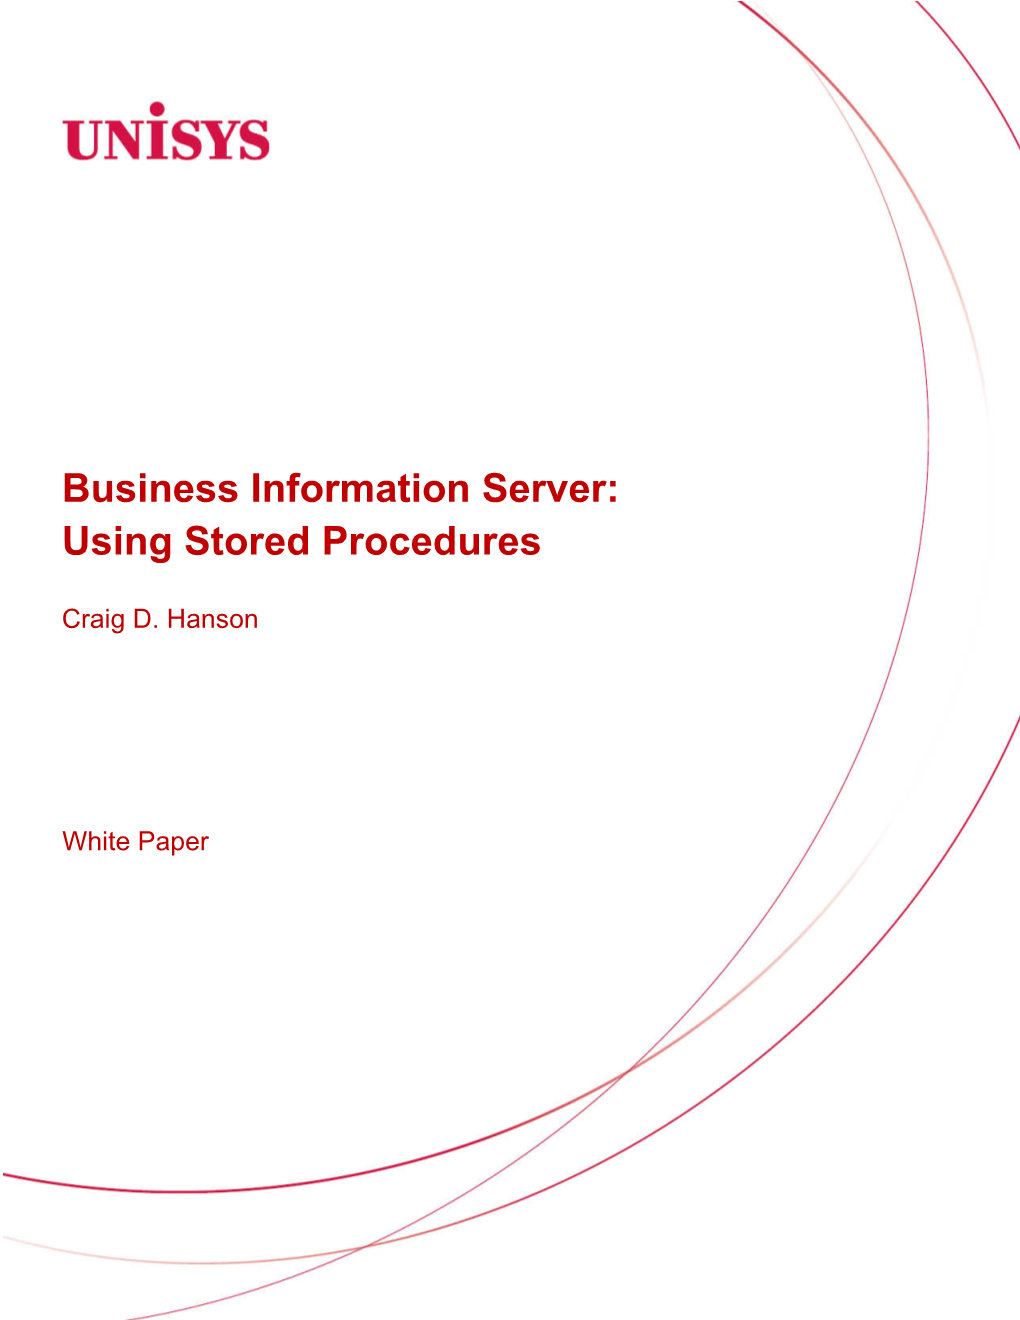 Business Information Server: Using Stored Procedures